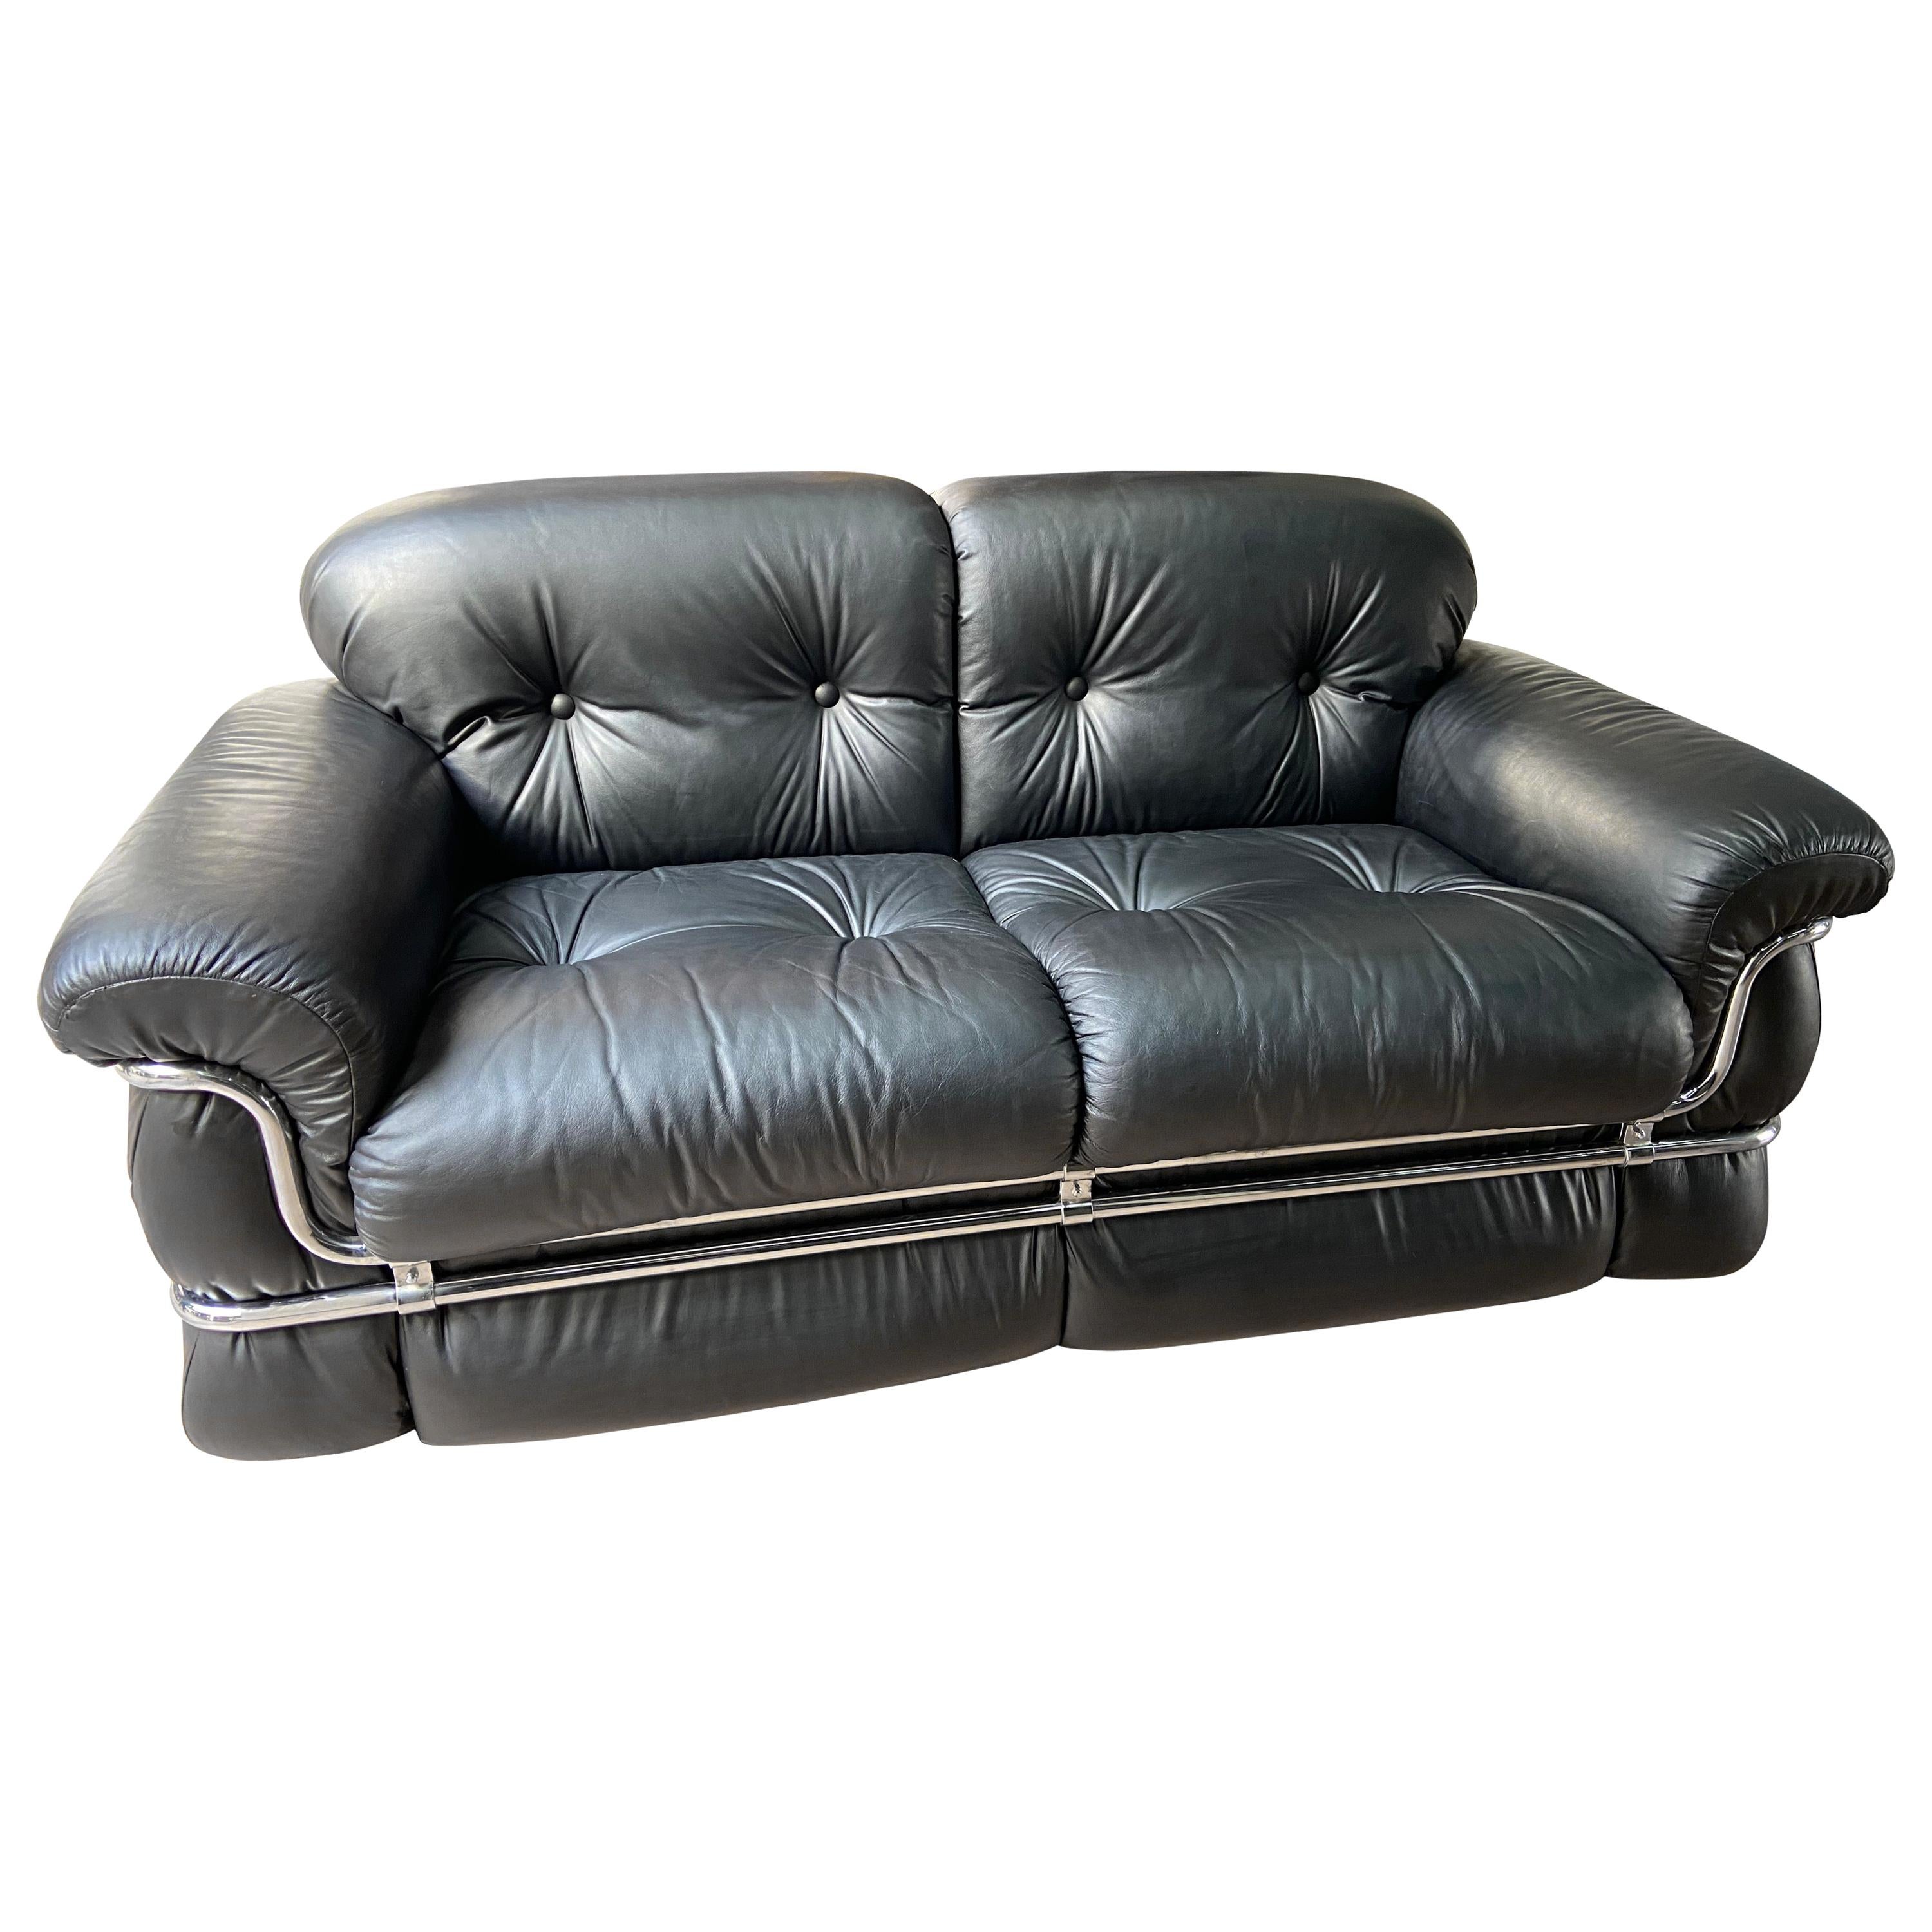 Adriano Piazzesi, Black Leather 2-Seat Sofa, 1976